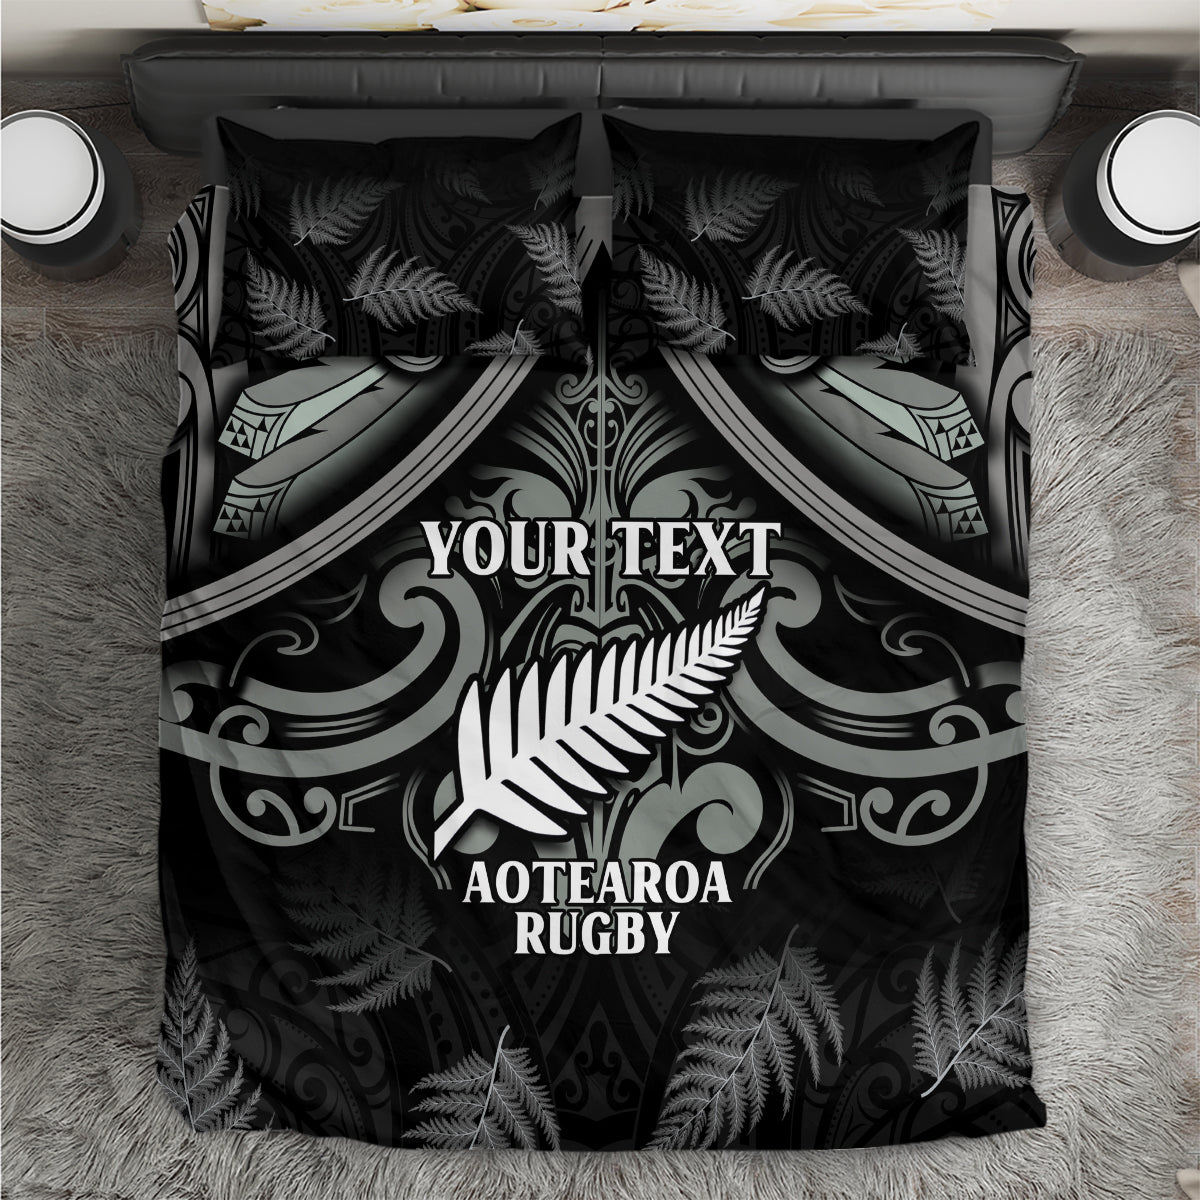 Custom New Zealand Silver Fern Rugby Bedding Set All Black Since 1892 Aotearoa Moko Maori